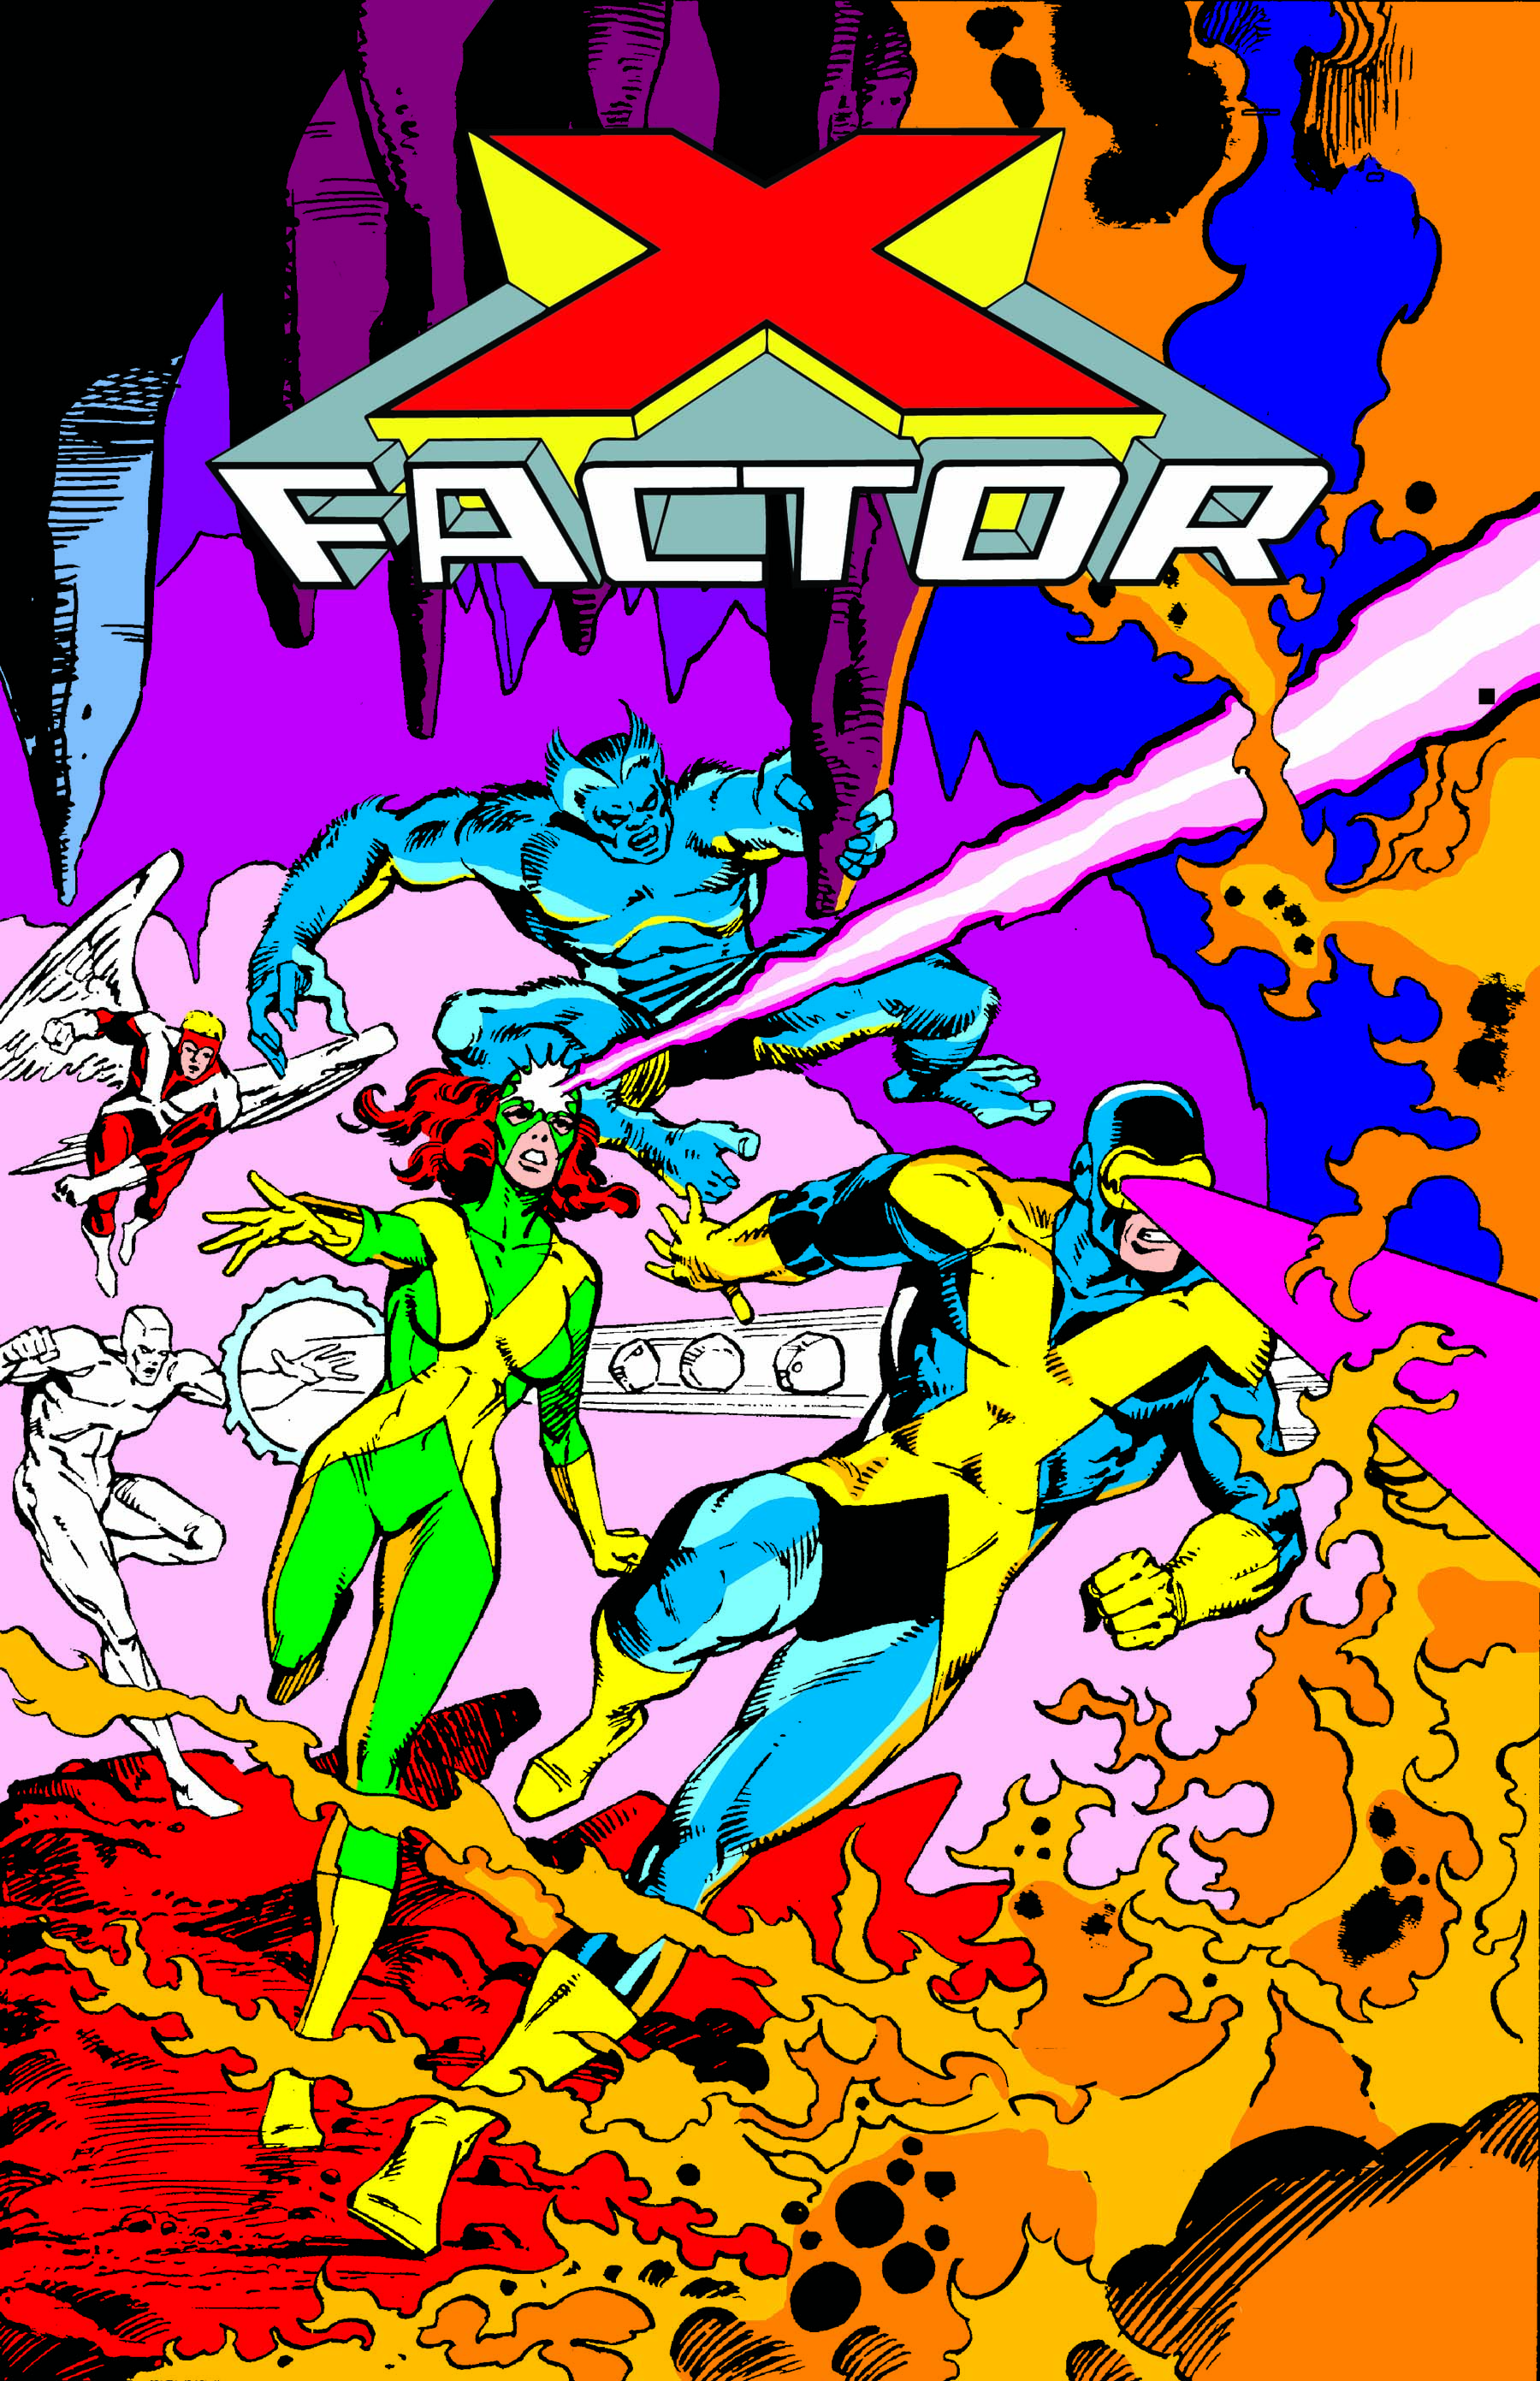 X-FACTOR: THE ORIGINAL X-MEN OMNIBUS VOL. 1 HC SIMONSON FIRST ISSUE COVER (Hardcover)